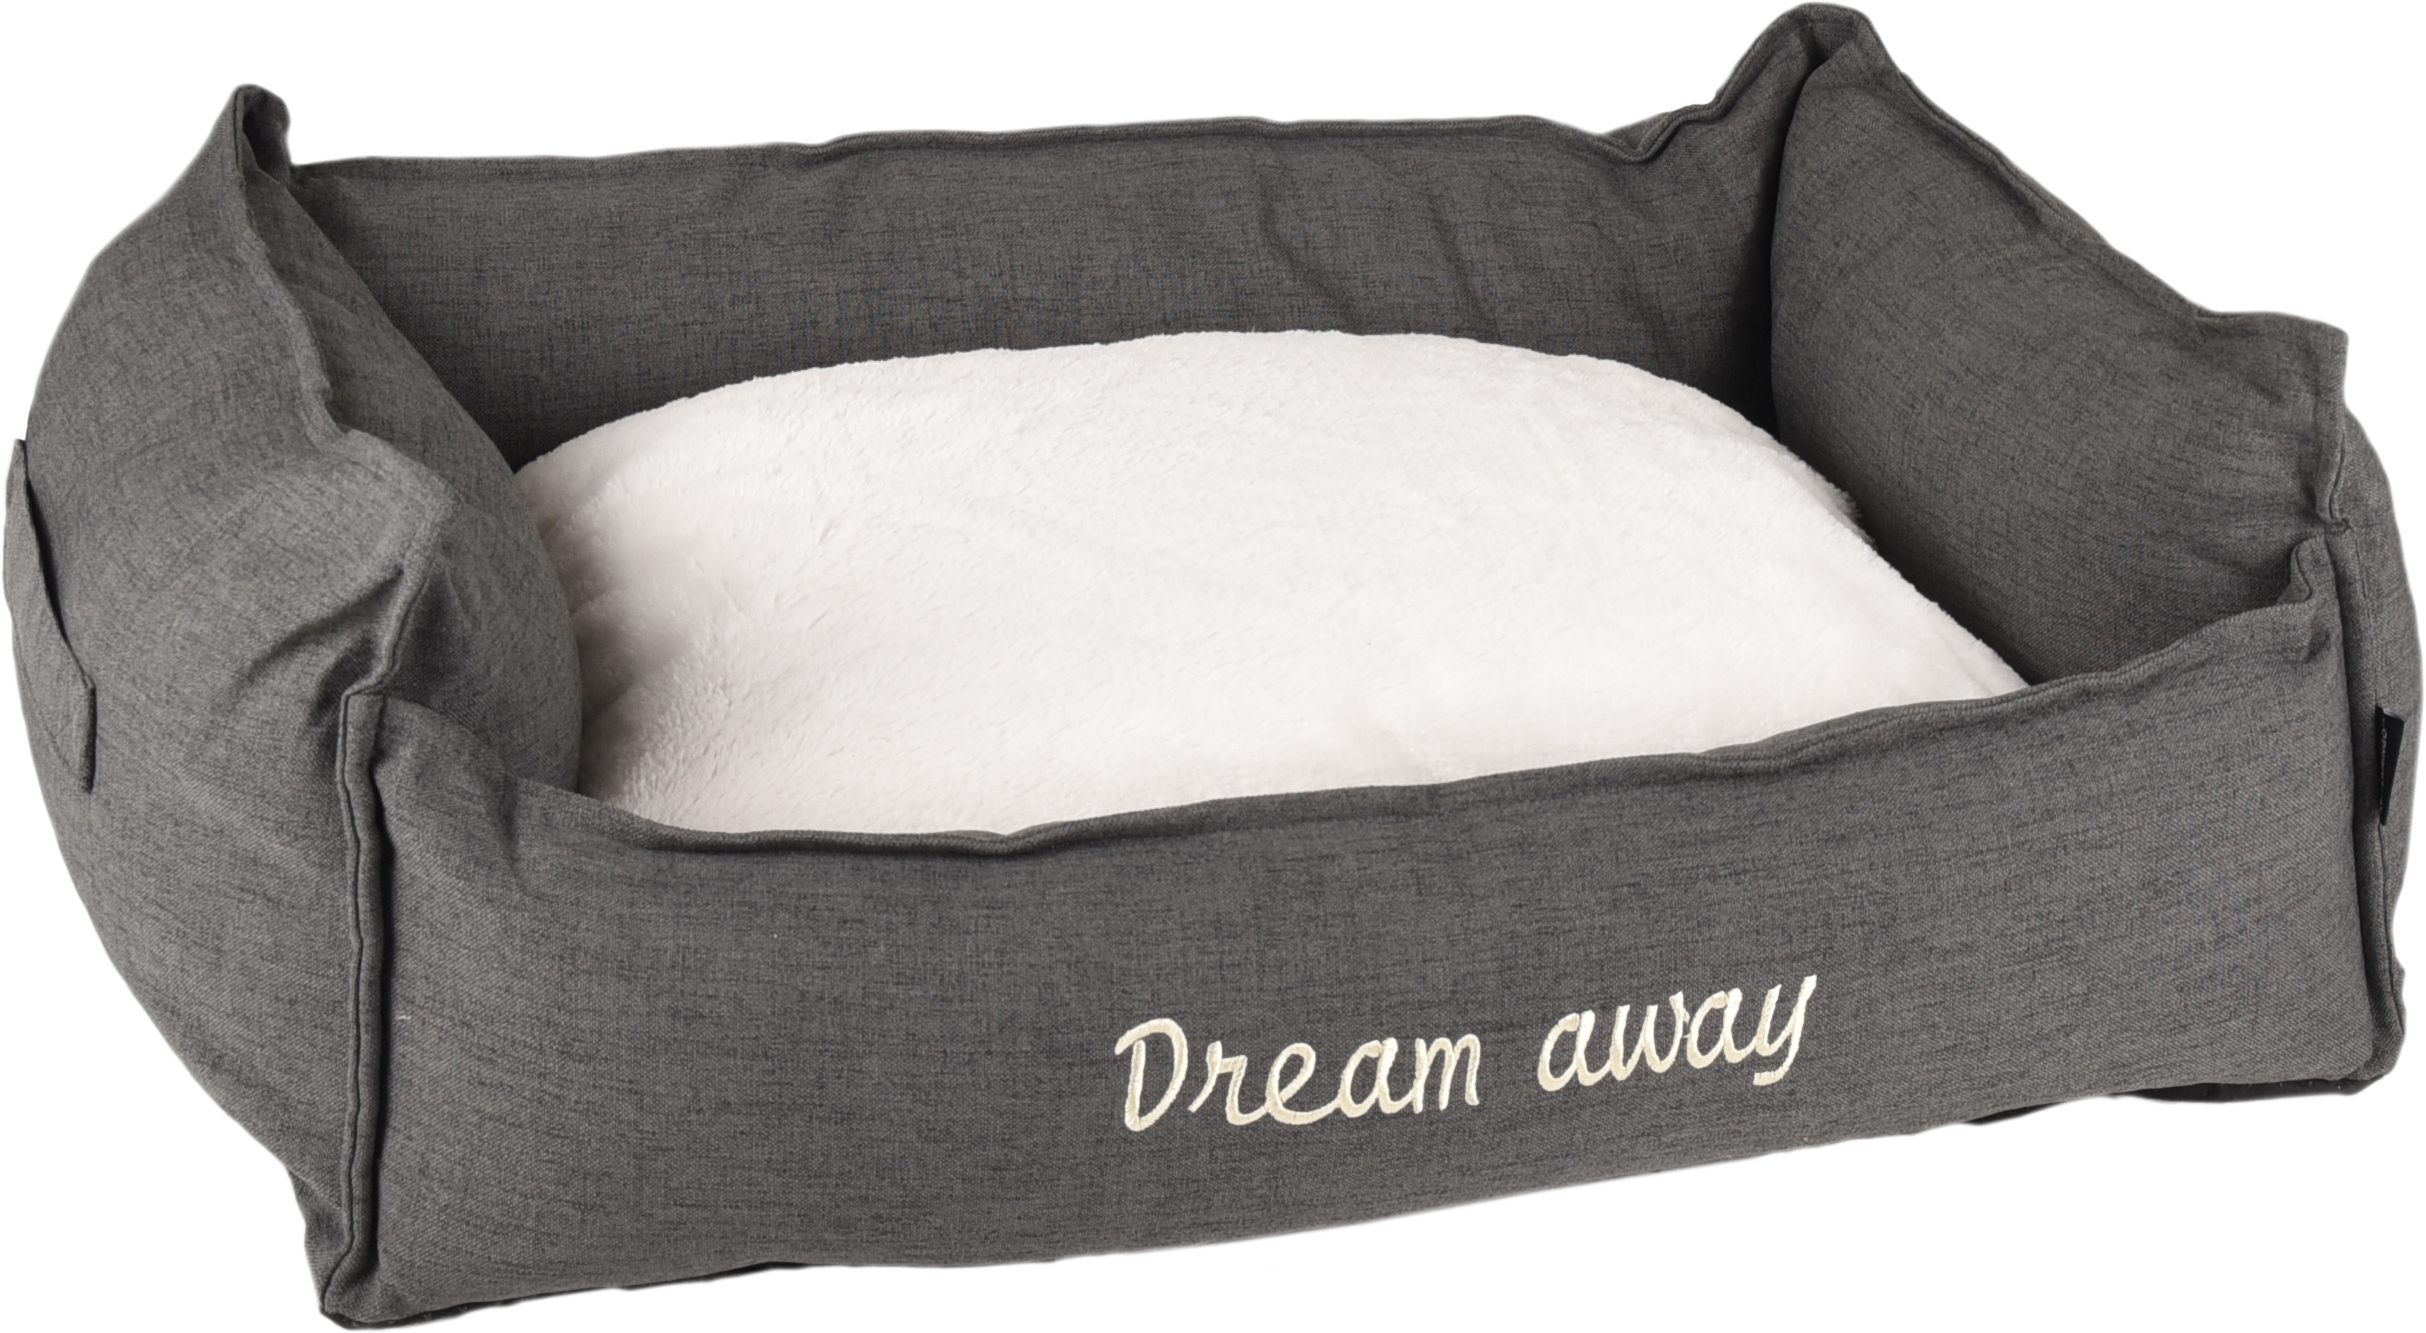 FLAMINGO Hondenmand Dream Away - Grijs - 70 x 50 x 25 cm grijs